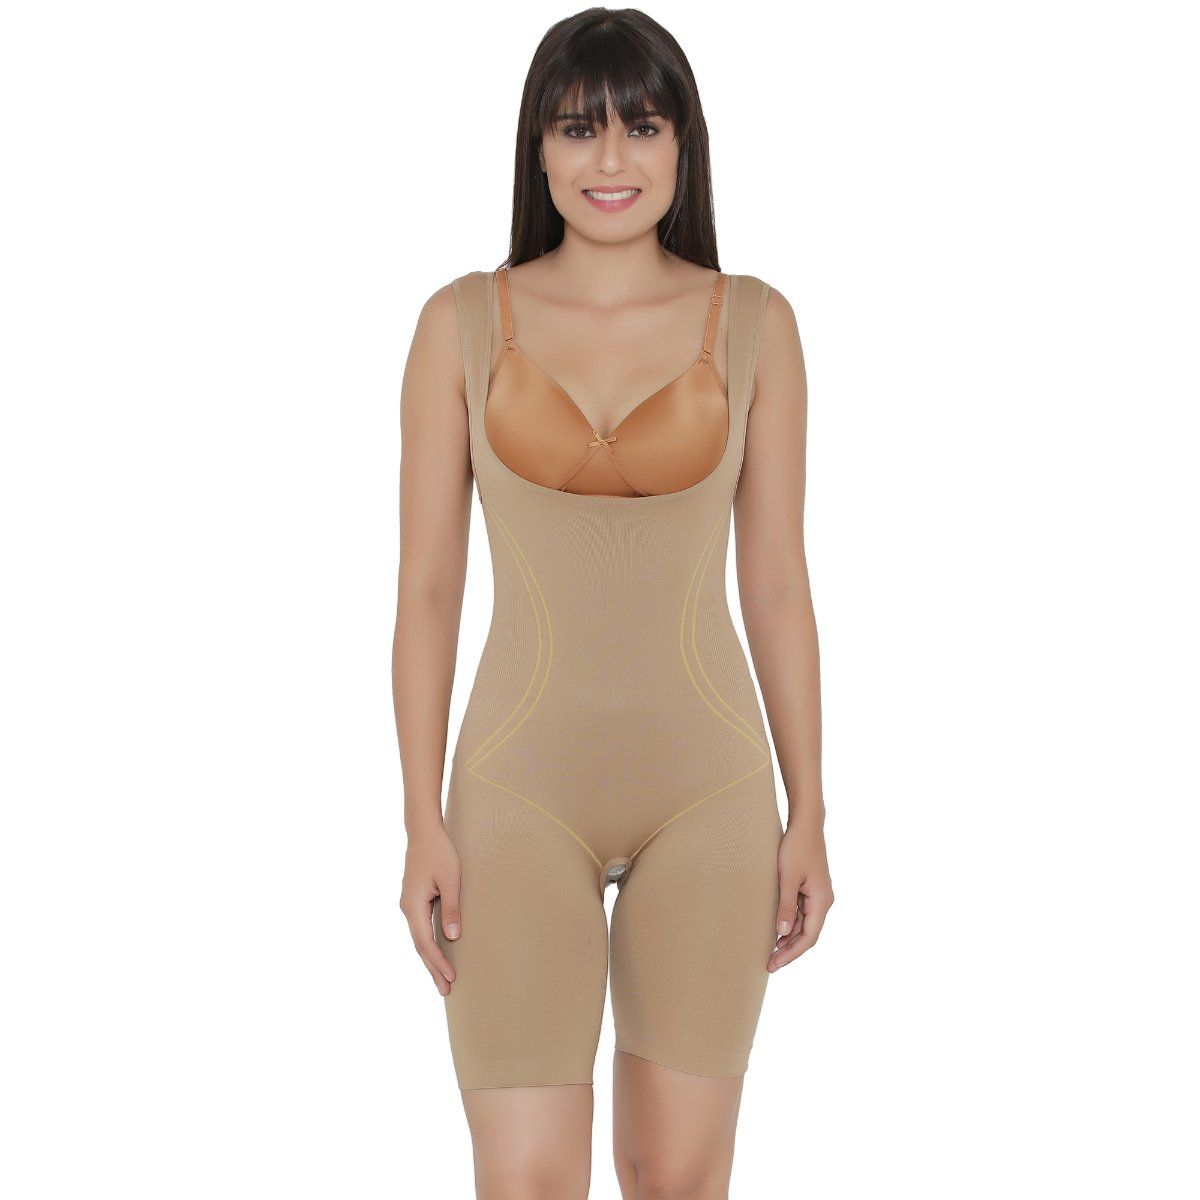 Clovia Women's Laser-Cut No-Panty Lines High Compression Body Suit